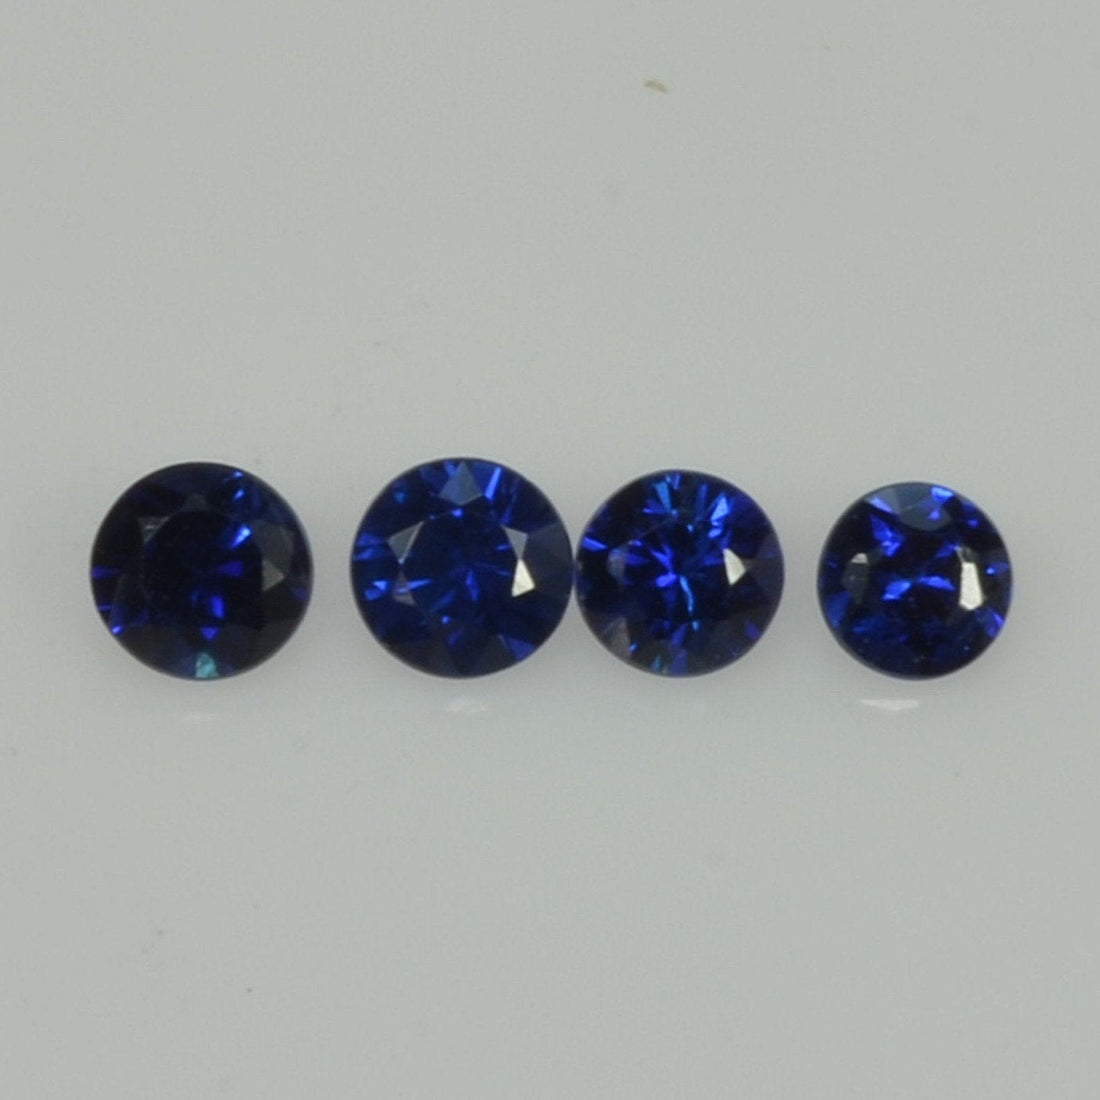 3.0-5.8 mm Natural Blue Sapphire Loose Gemstone Round Diamond Cut Vs Quality Color - Thai Gems Export Ltd.